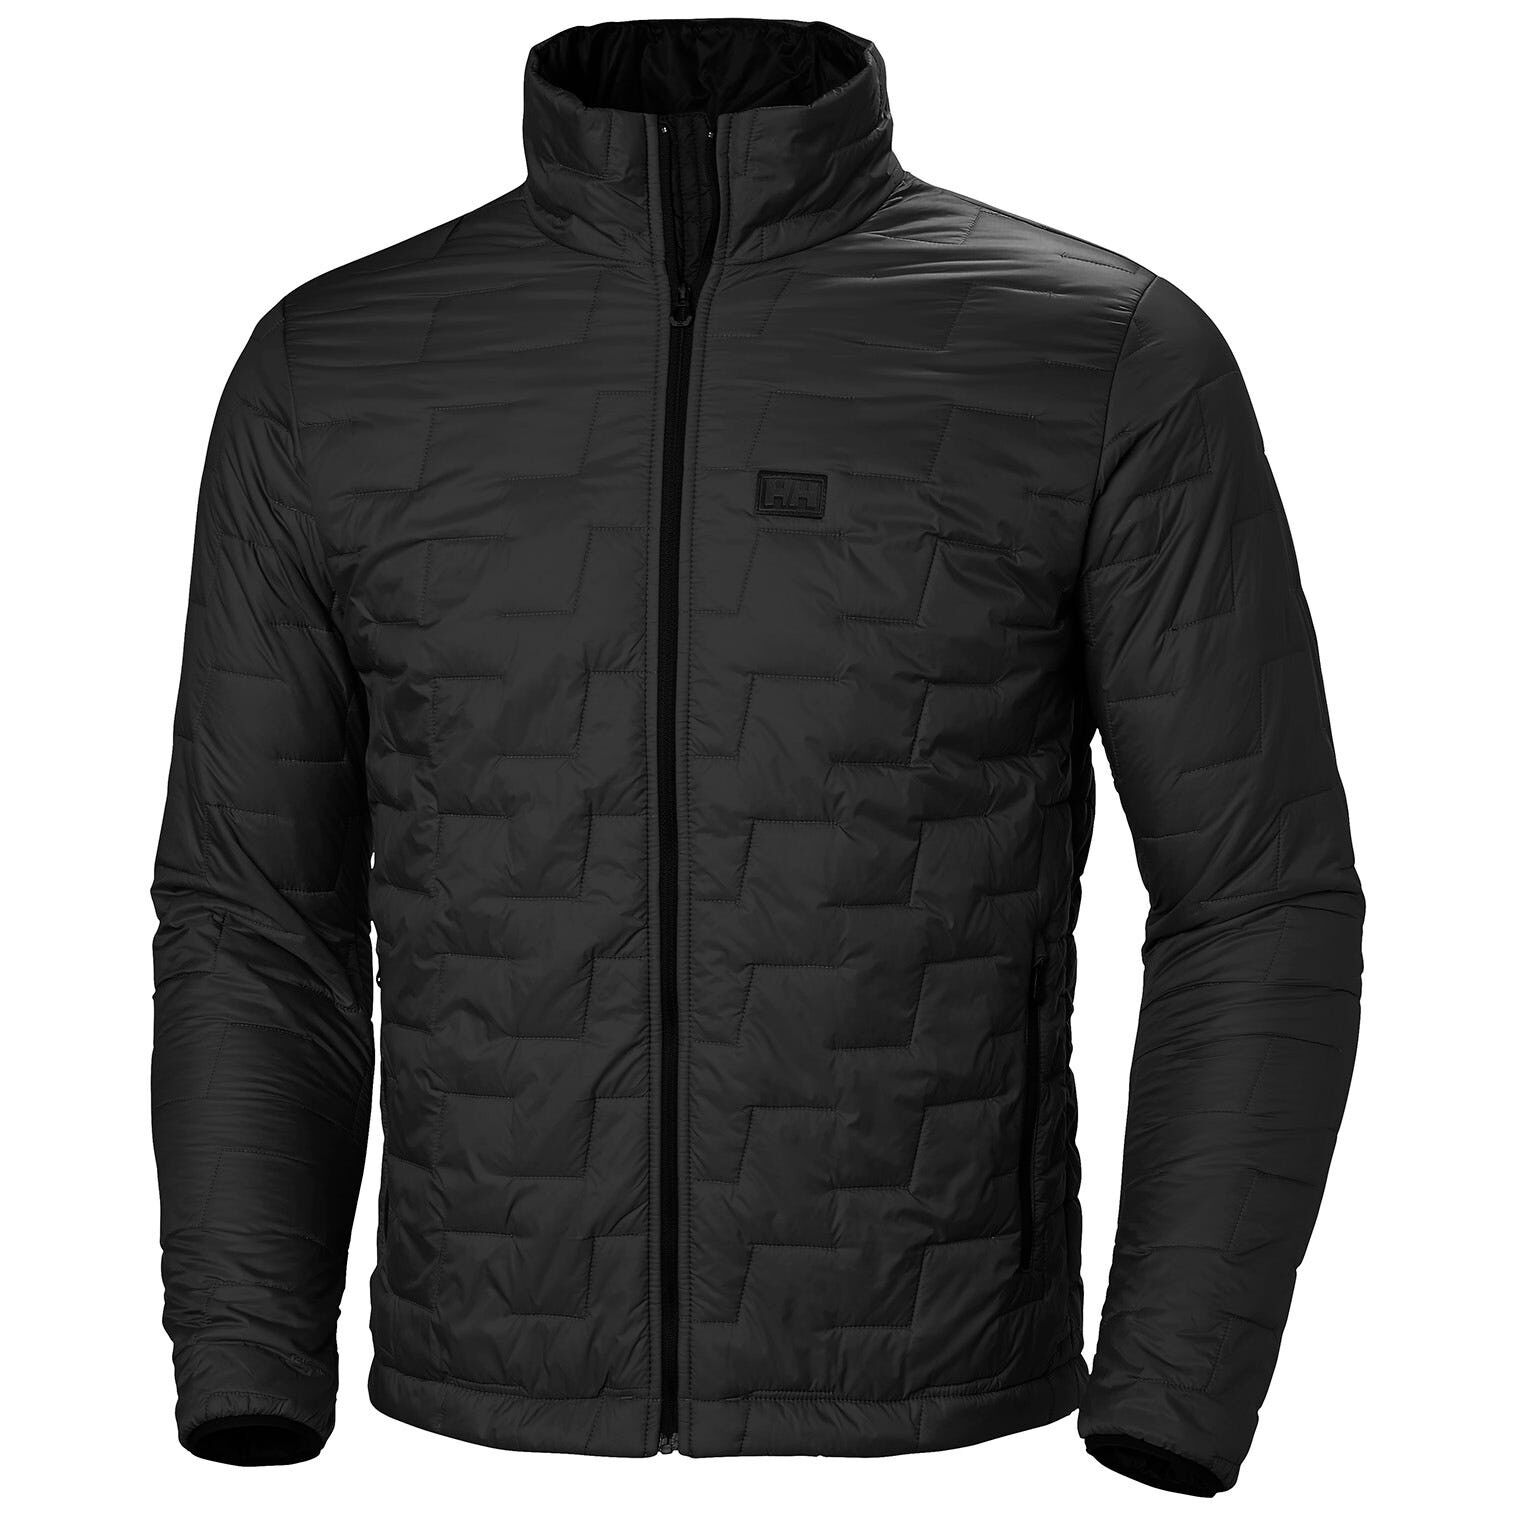 Helly Hansen Lifaloft Insulator Jacket - Synthetic jacket - Men's